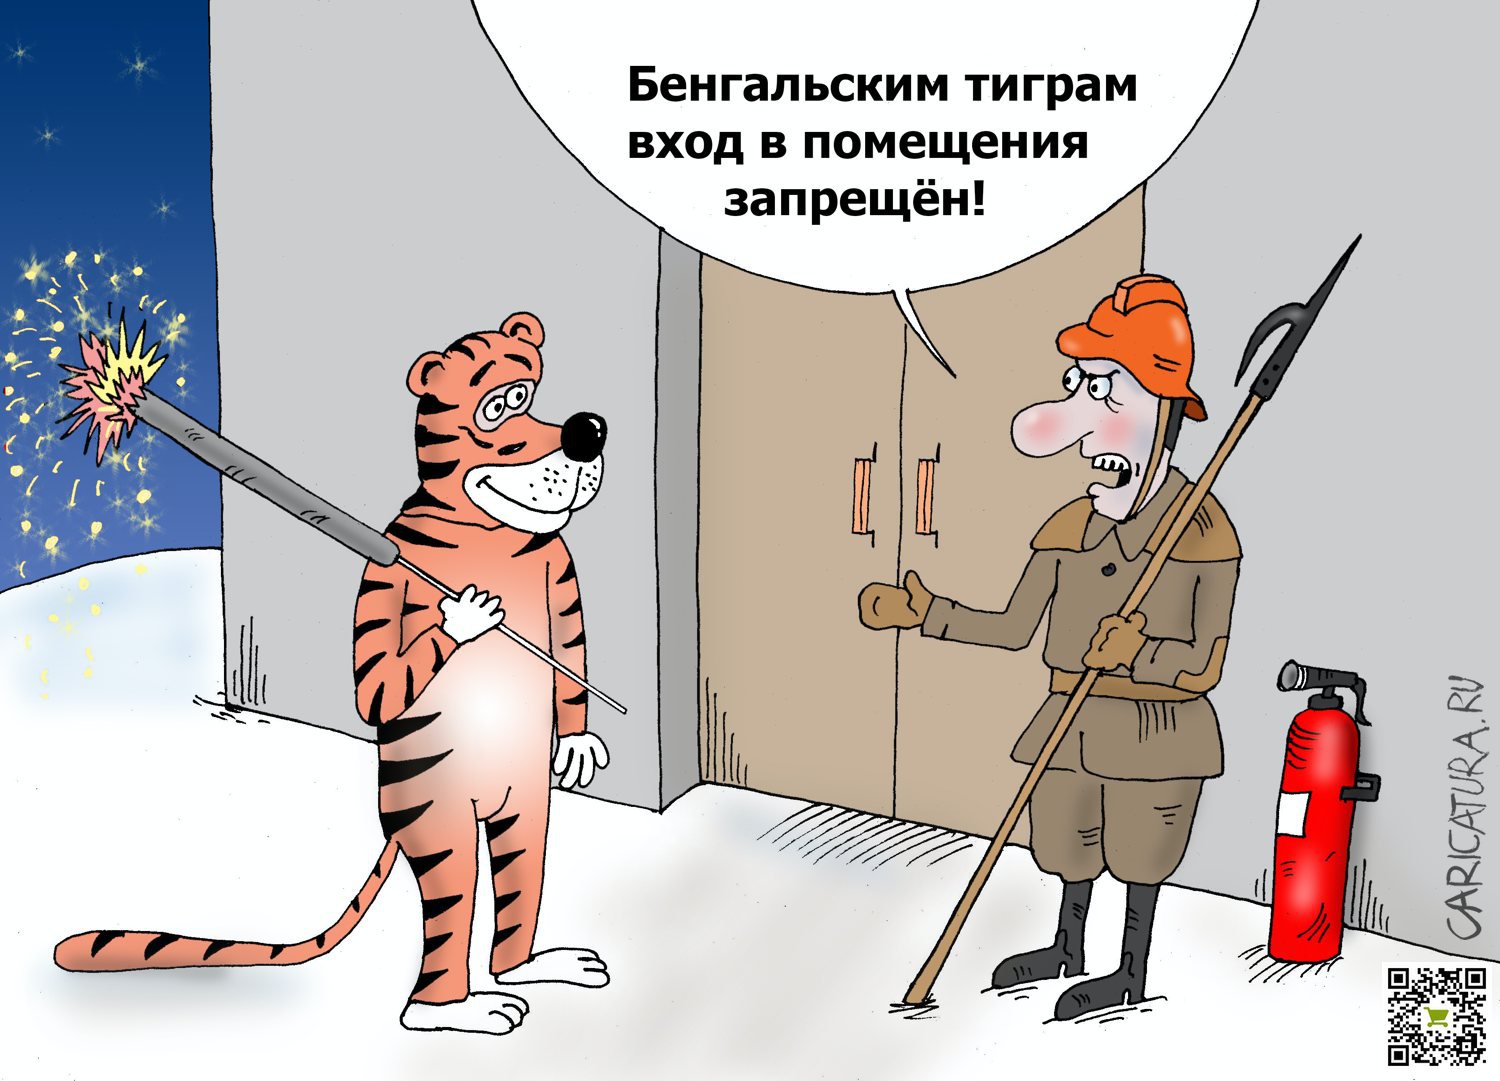 Карикатура "Огнеопасно", Валерий Тарасенко